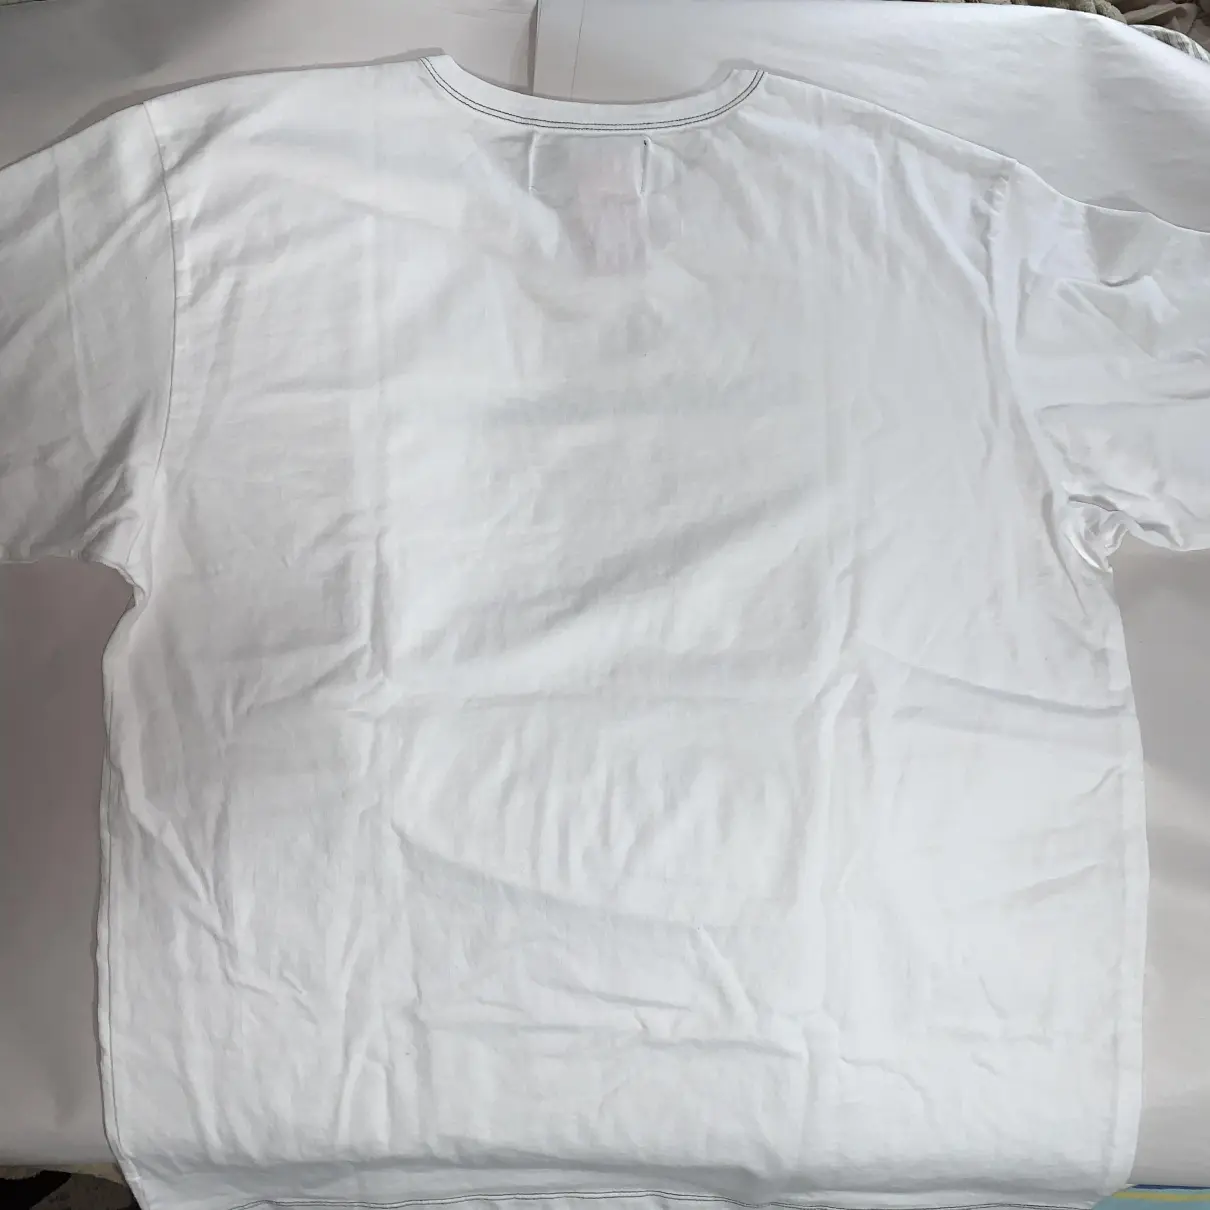 Buy BIANCA CHANDON White Cotton T-shirt online